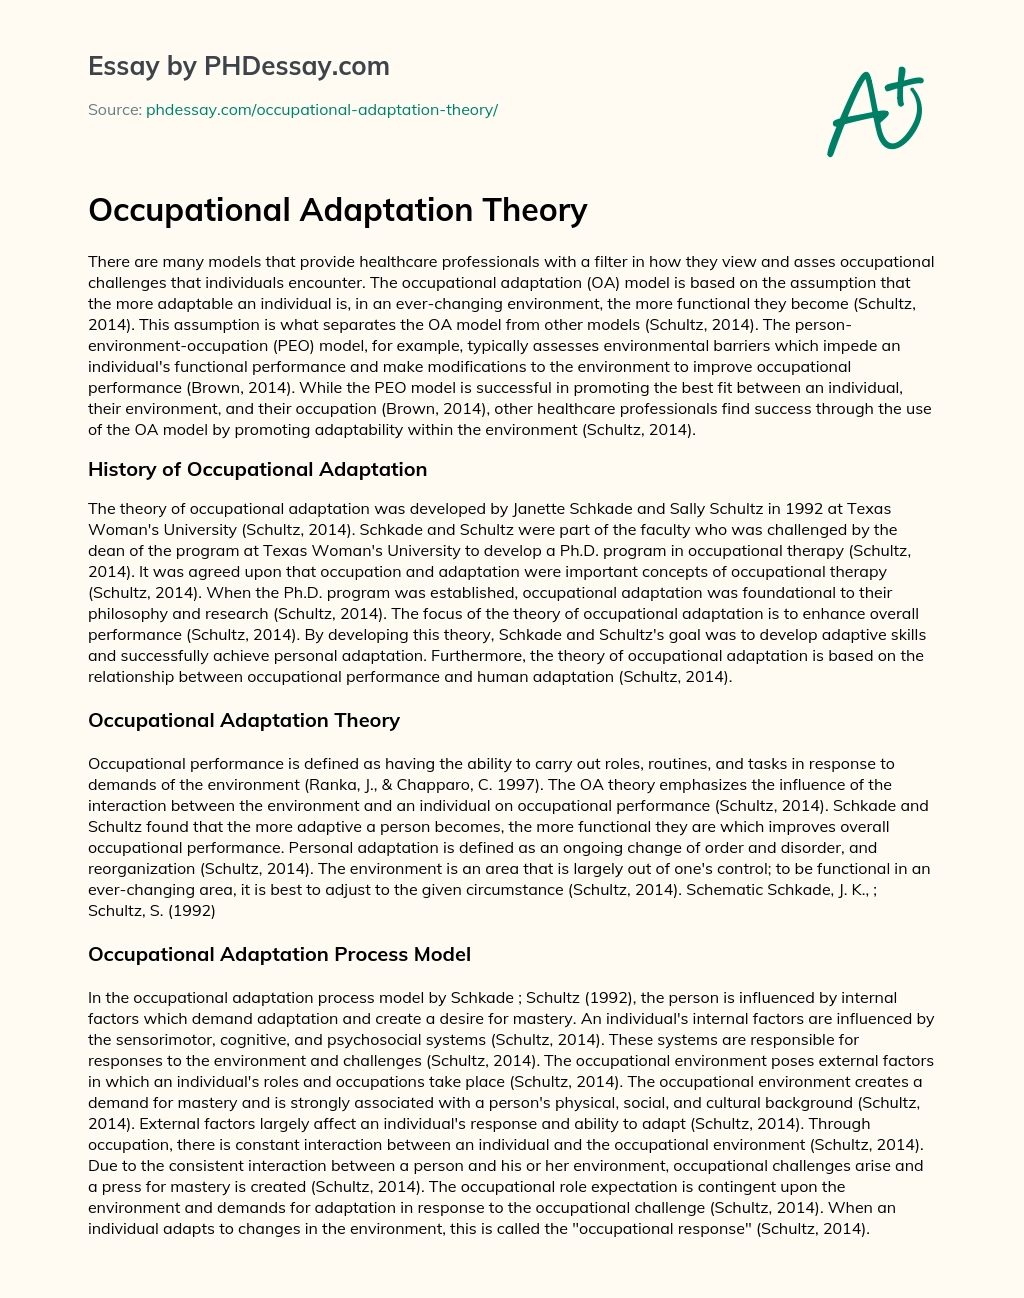 Occupational Adaptation Theory essay